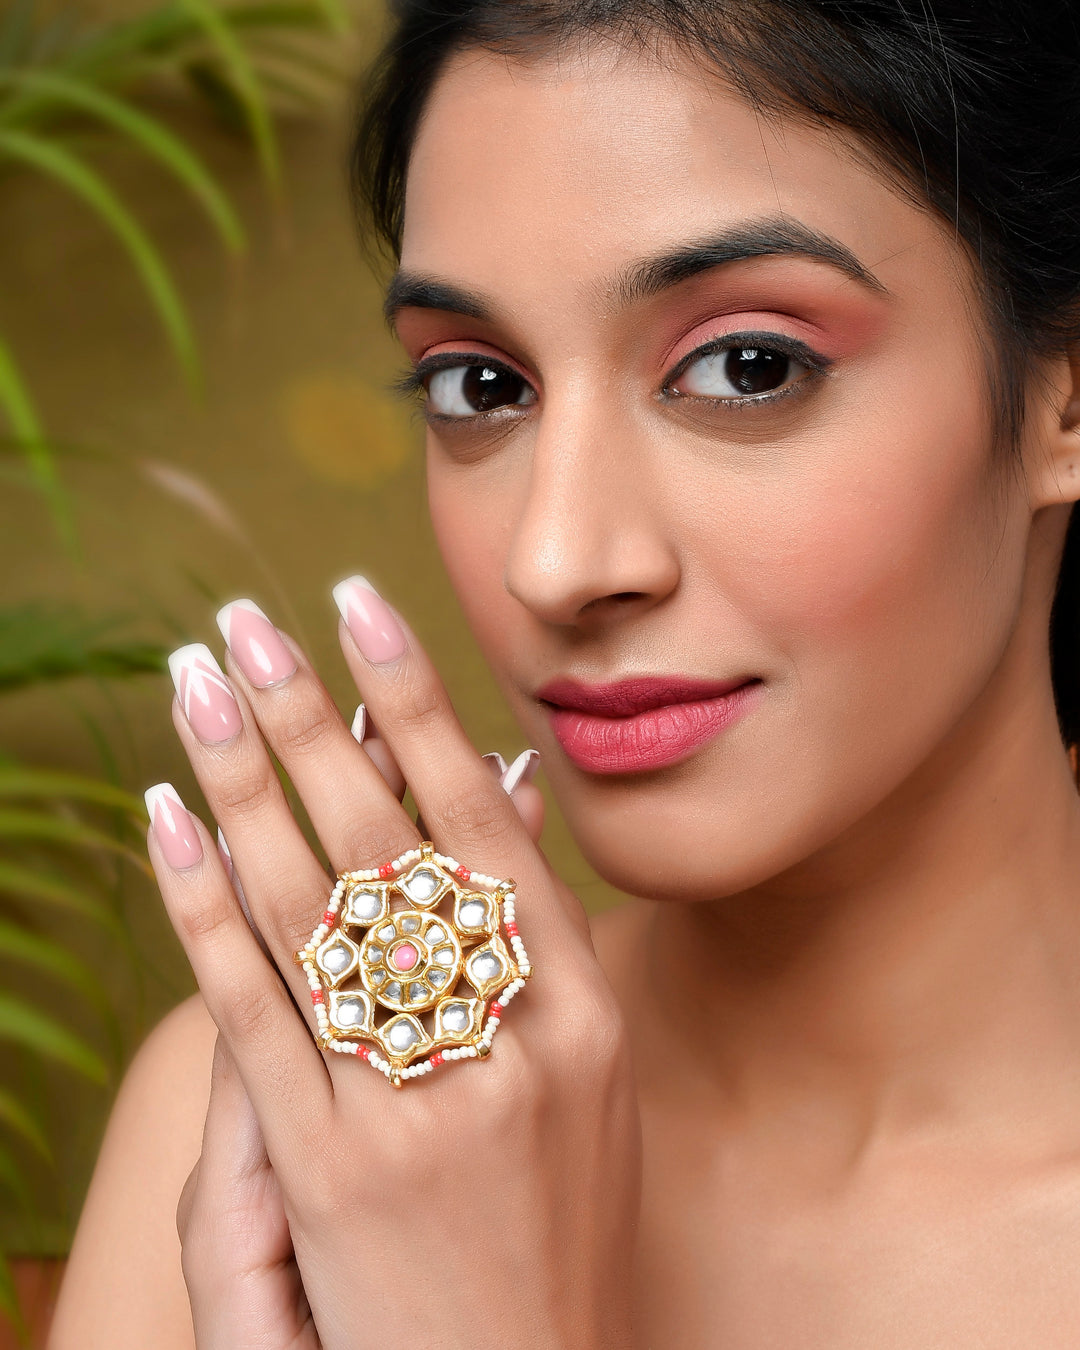 DASTOOR Gold-Plated Pink  White Kundan Studded Meenakari Adjustable Finger Ring